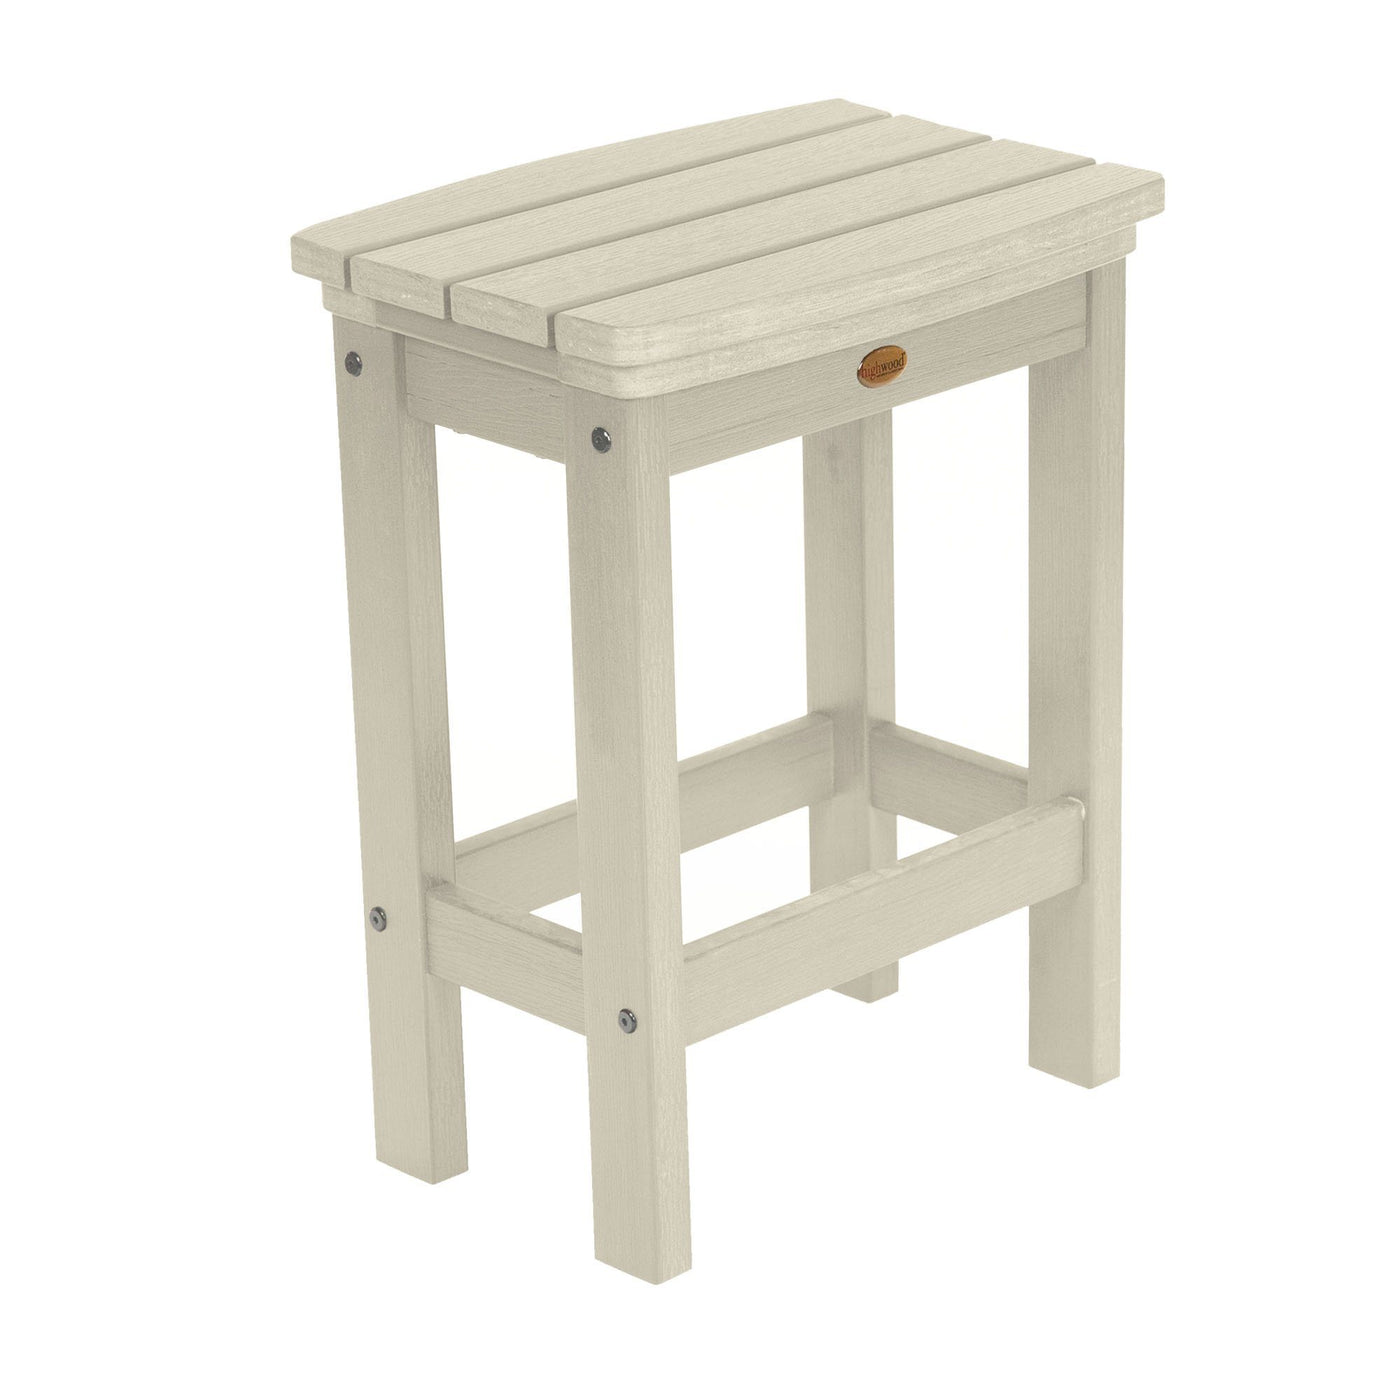 Lehigh counter height stool in Whitewash